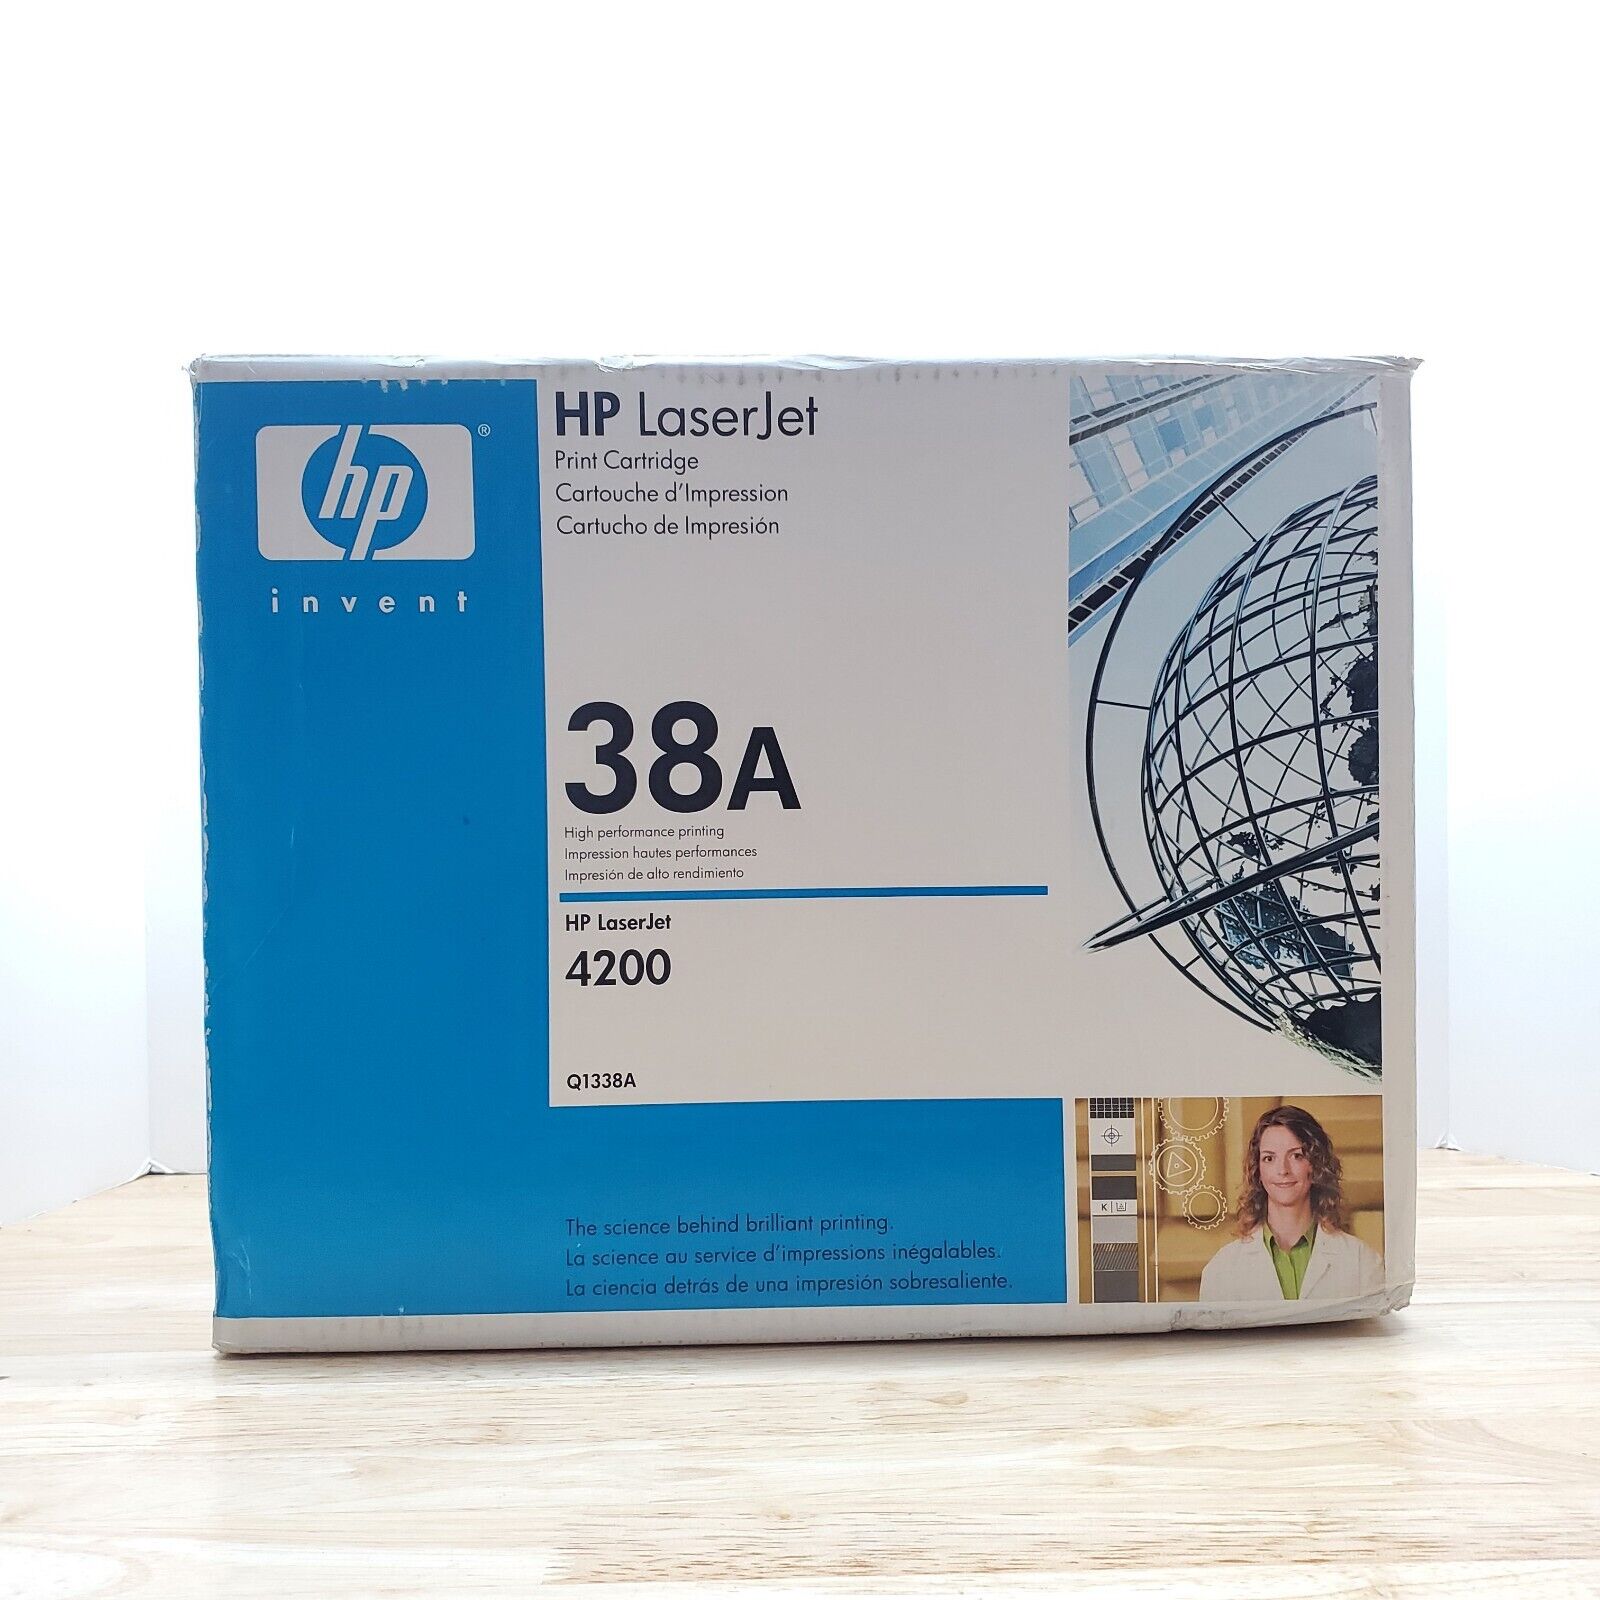 Genuine OEM HP LaserJet Print Cartridge Black Toner 38A Q1338A New Open Box 